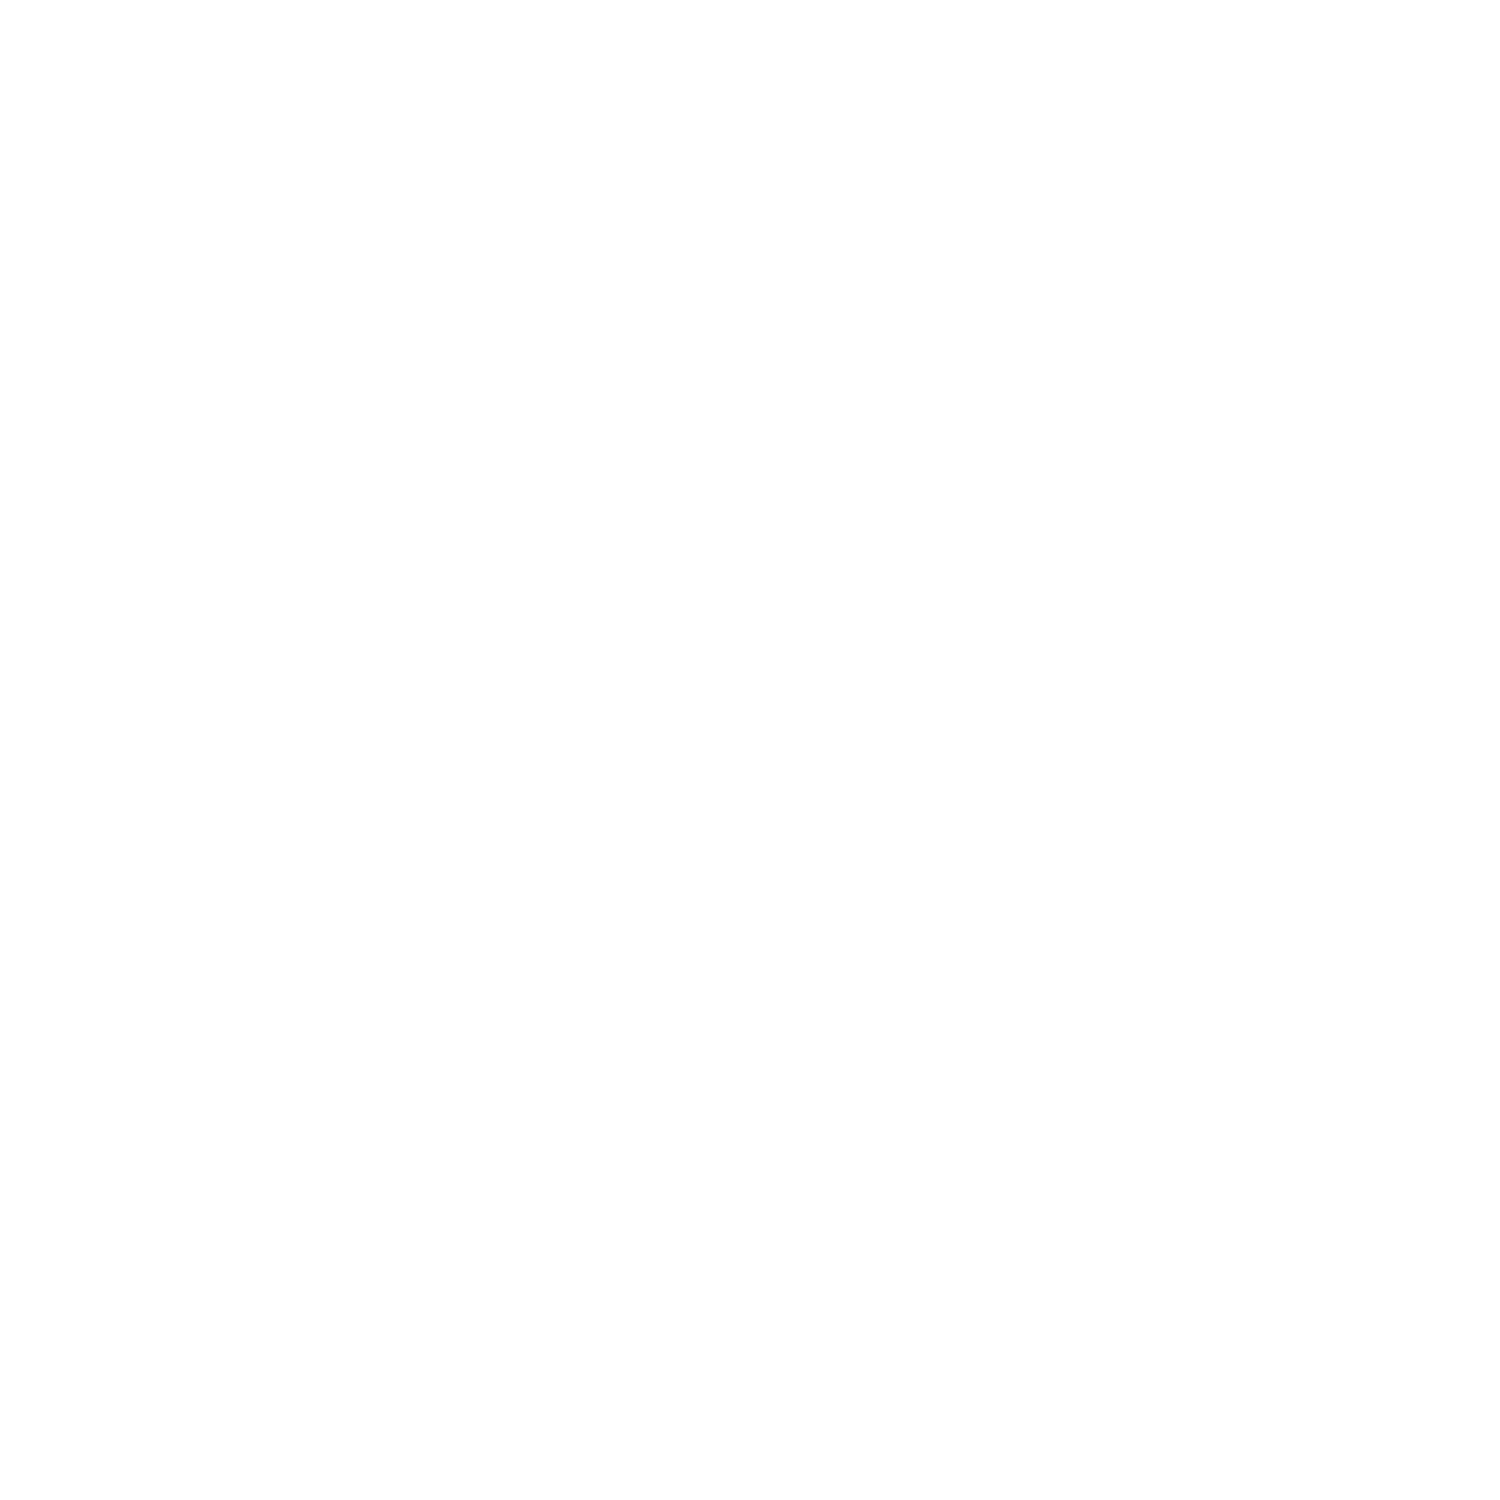 NYYYC - THE NEW YORK YO-YO CLUB